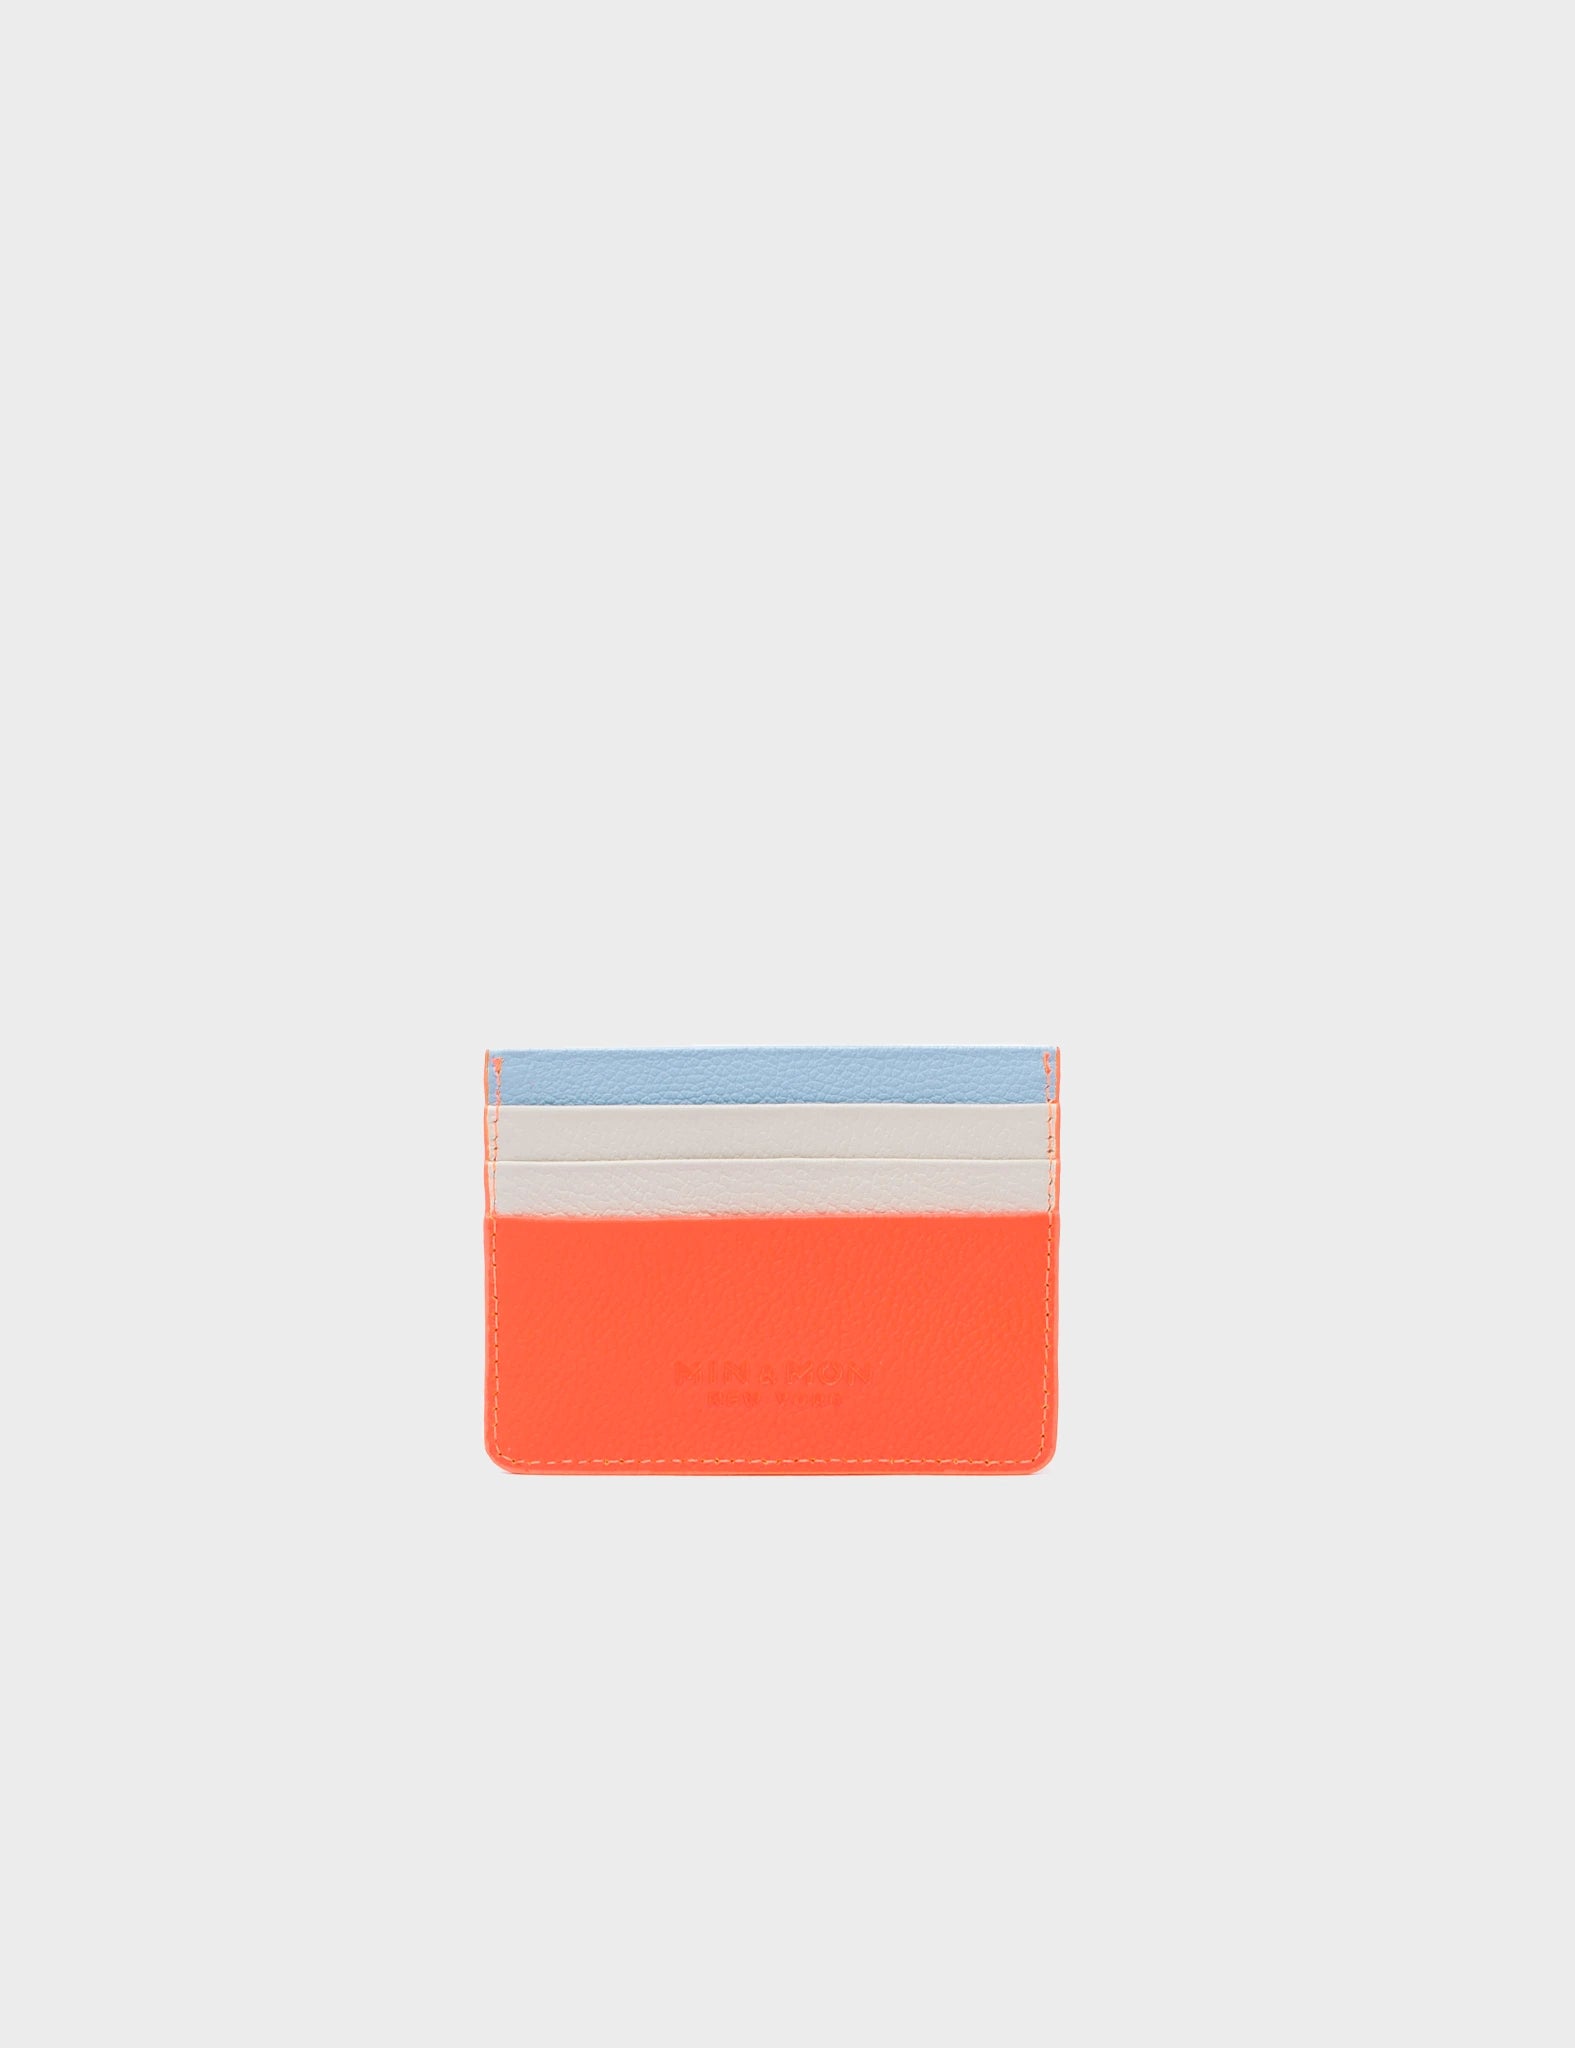 Filium Wallet Neon Orange And Cream Leather Cardholder - Eyes Pattern Debossed - Back 